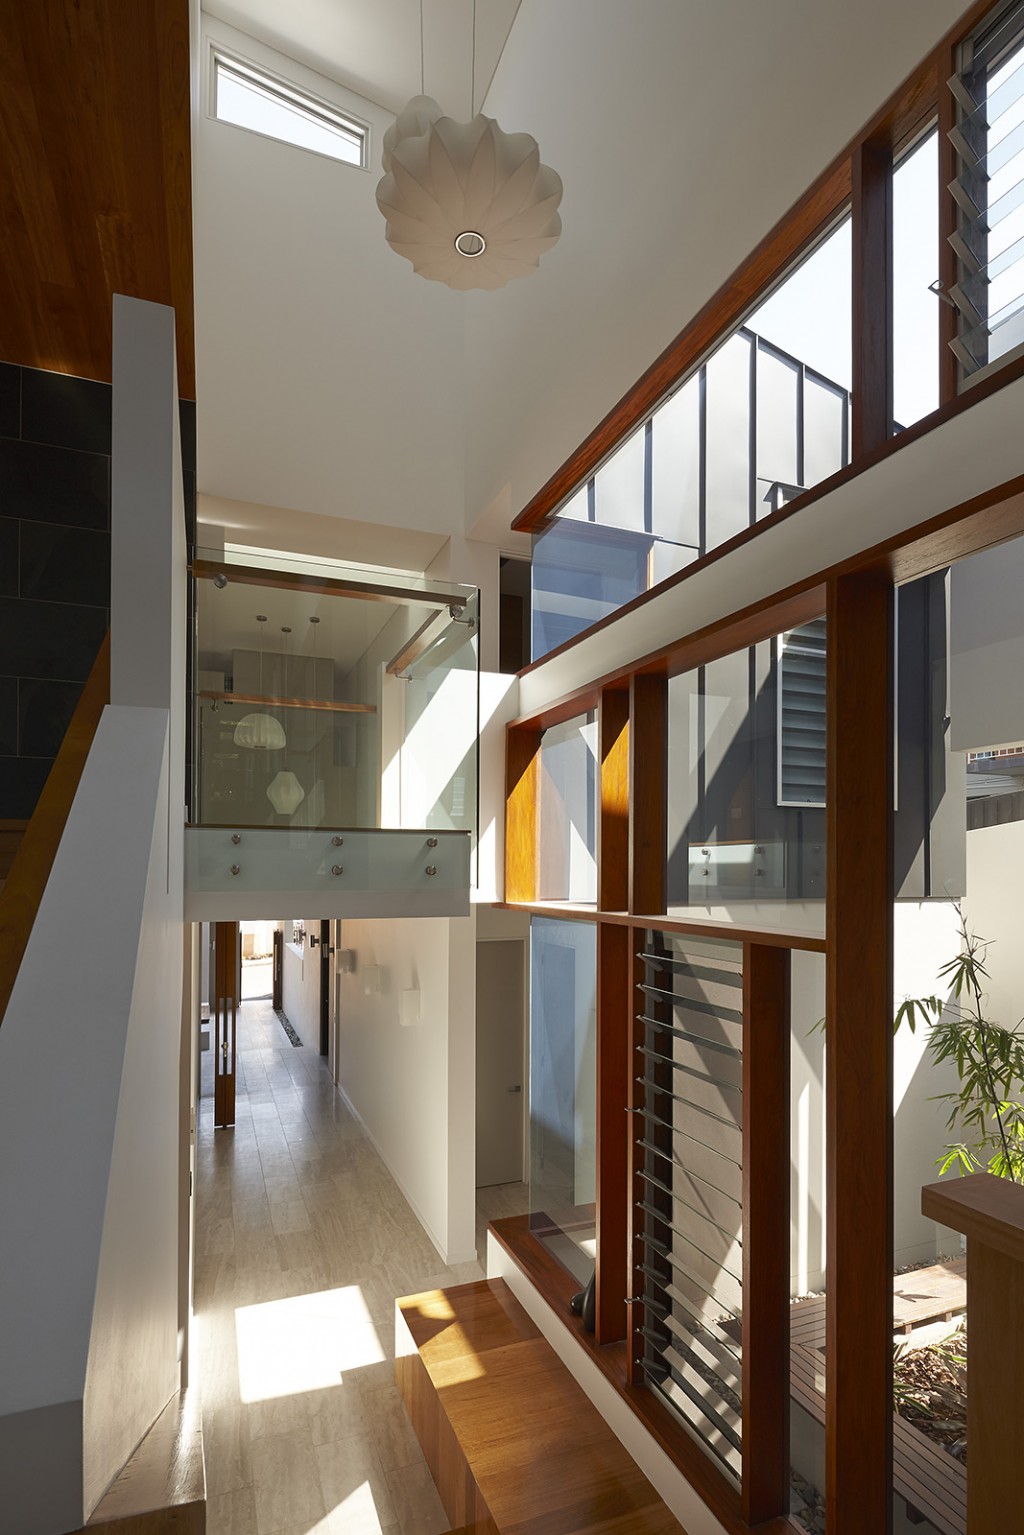 Boarding House by Shaun Lockyer Architects